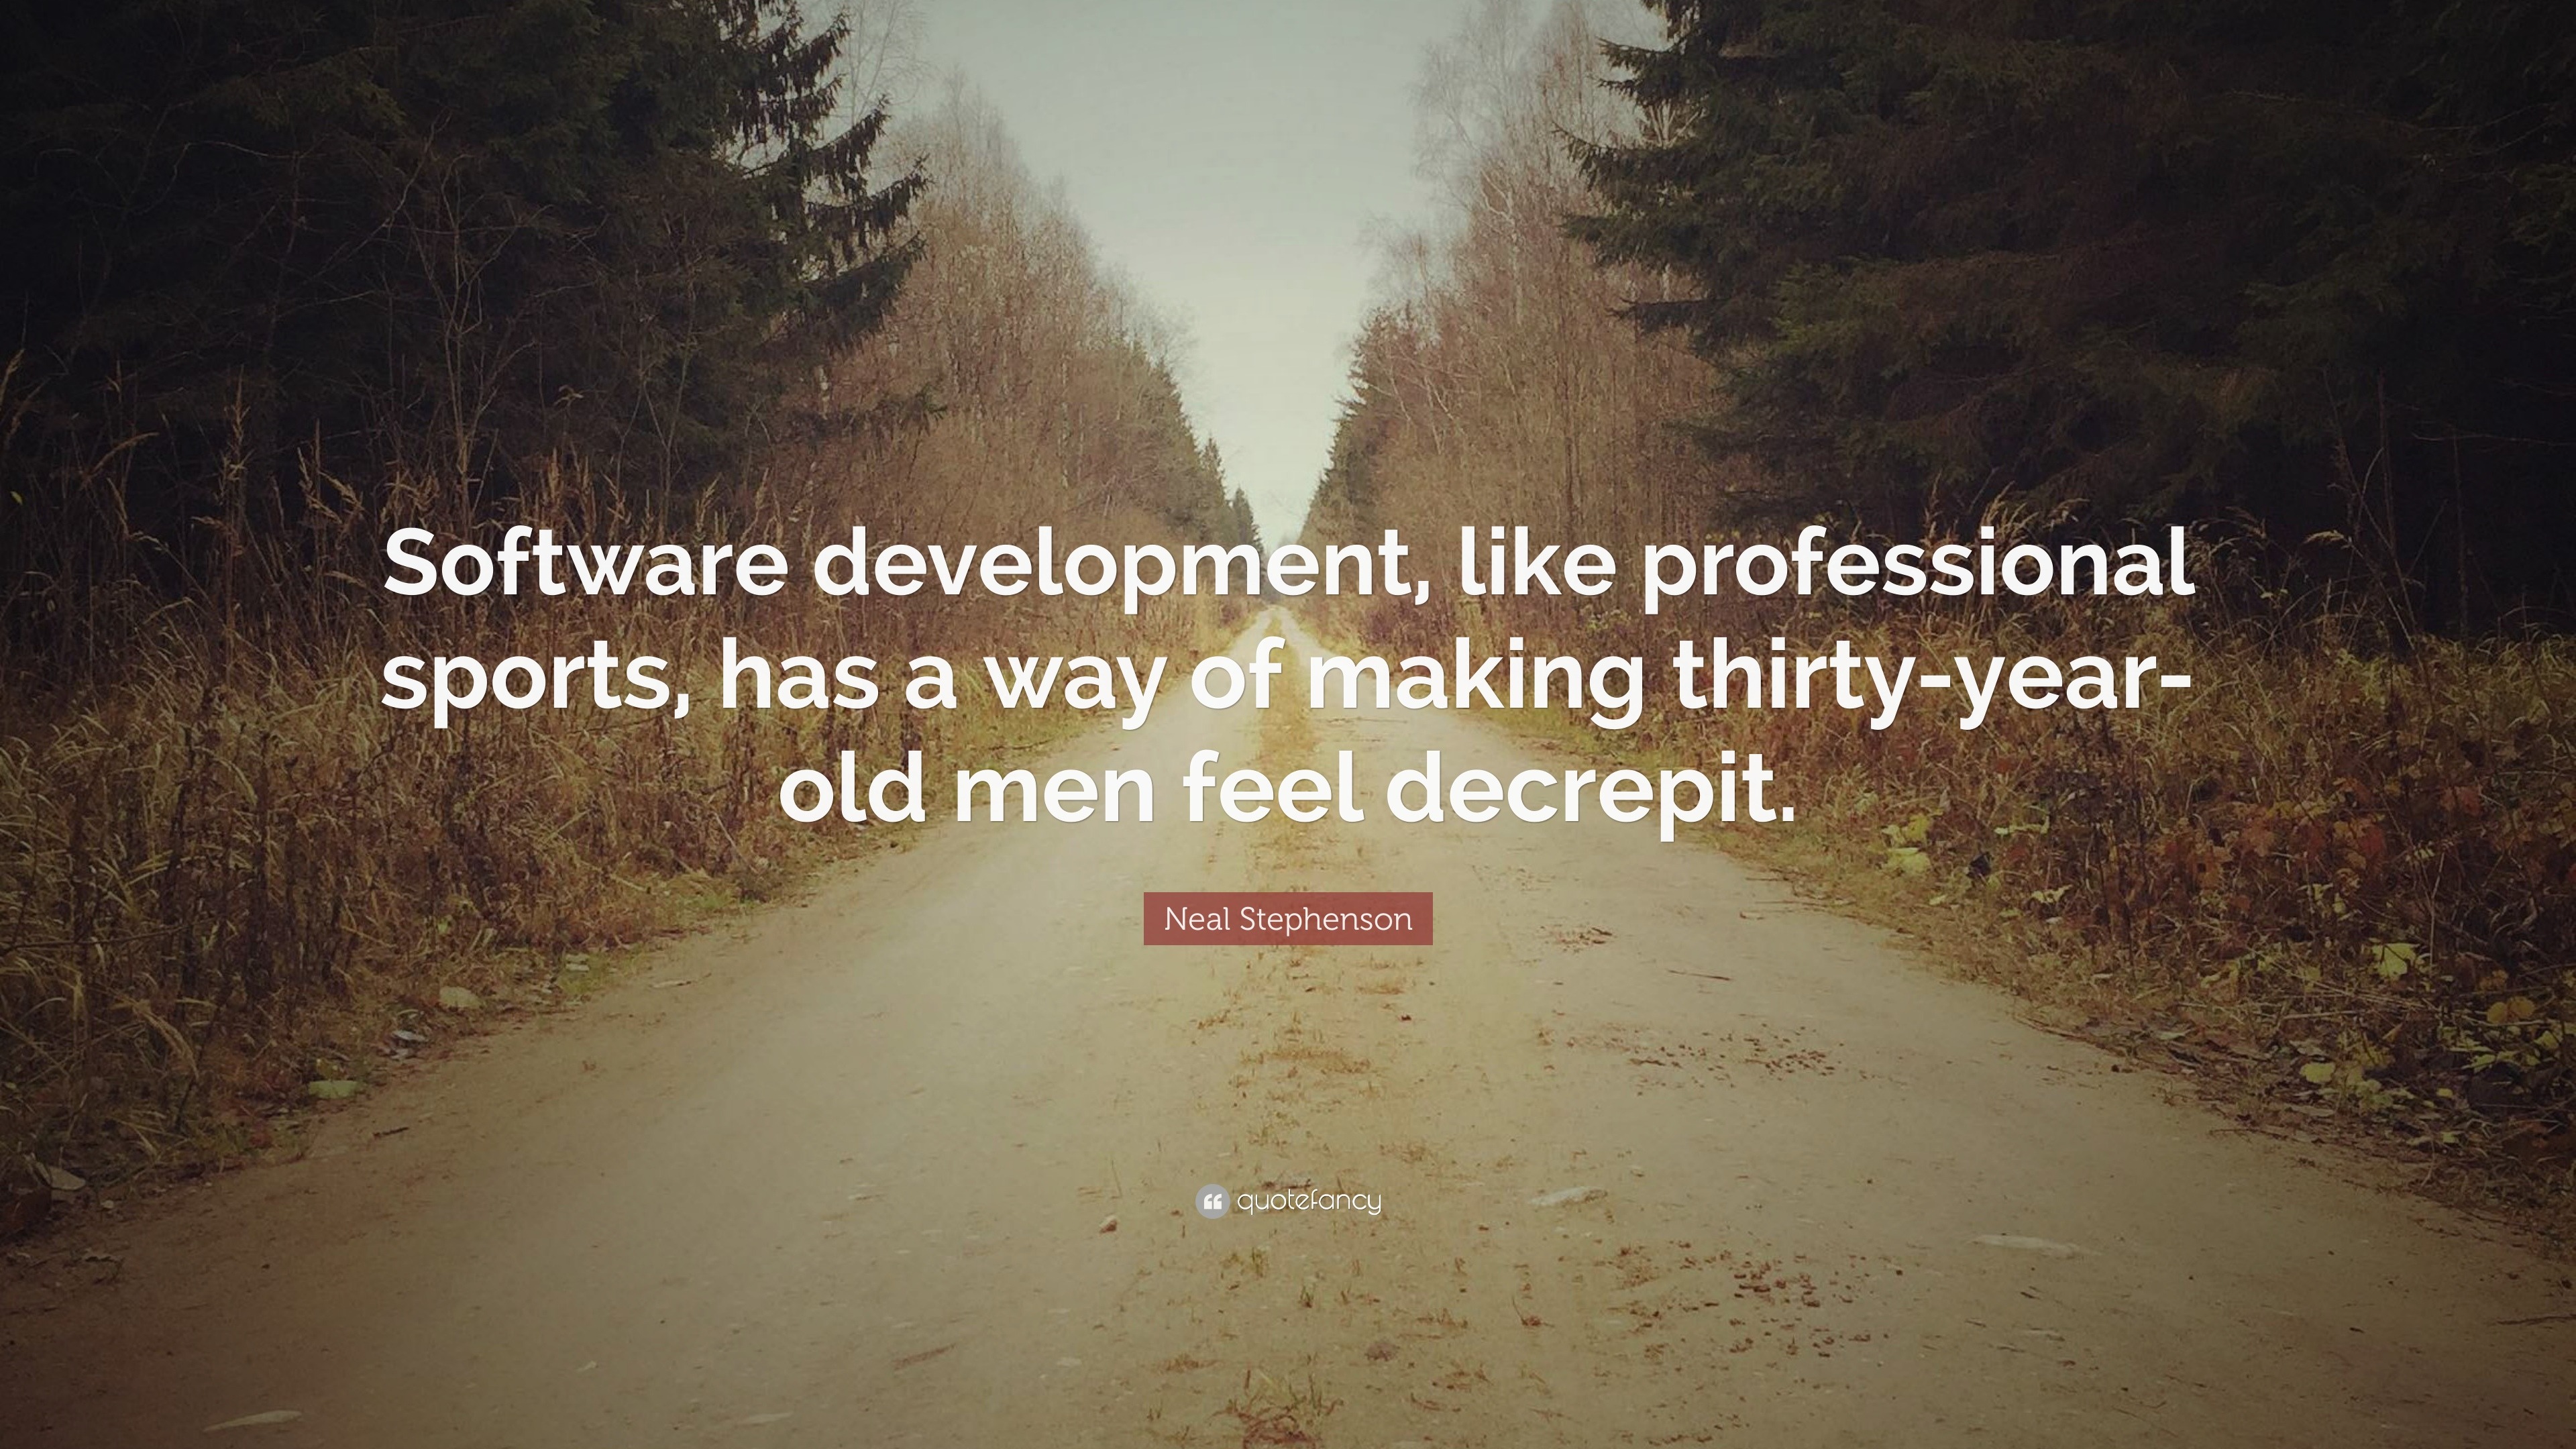 Neal Stephenson Quote: “Software development, like professional sports